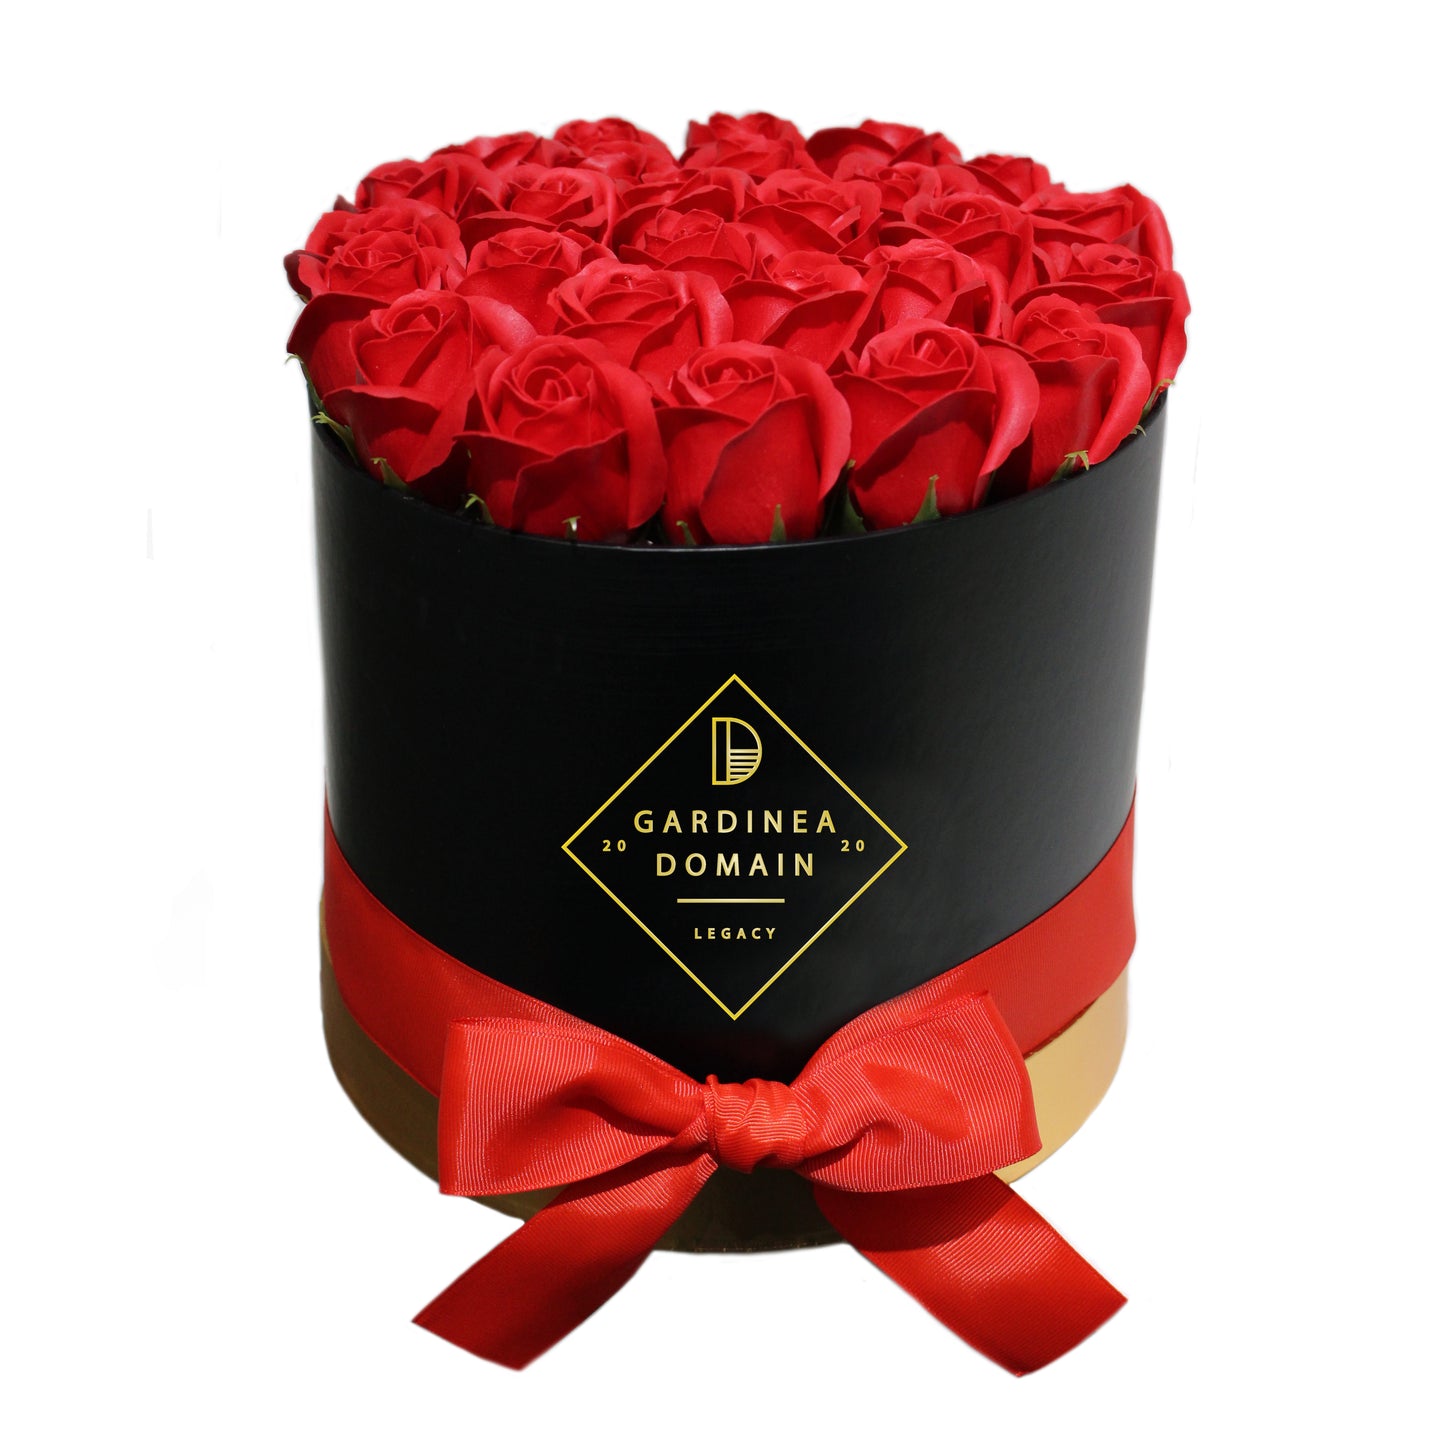 Aranjament floral Gardinea Domain® 27 trandafiri rosii sapun in cutie neagra cadou